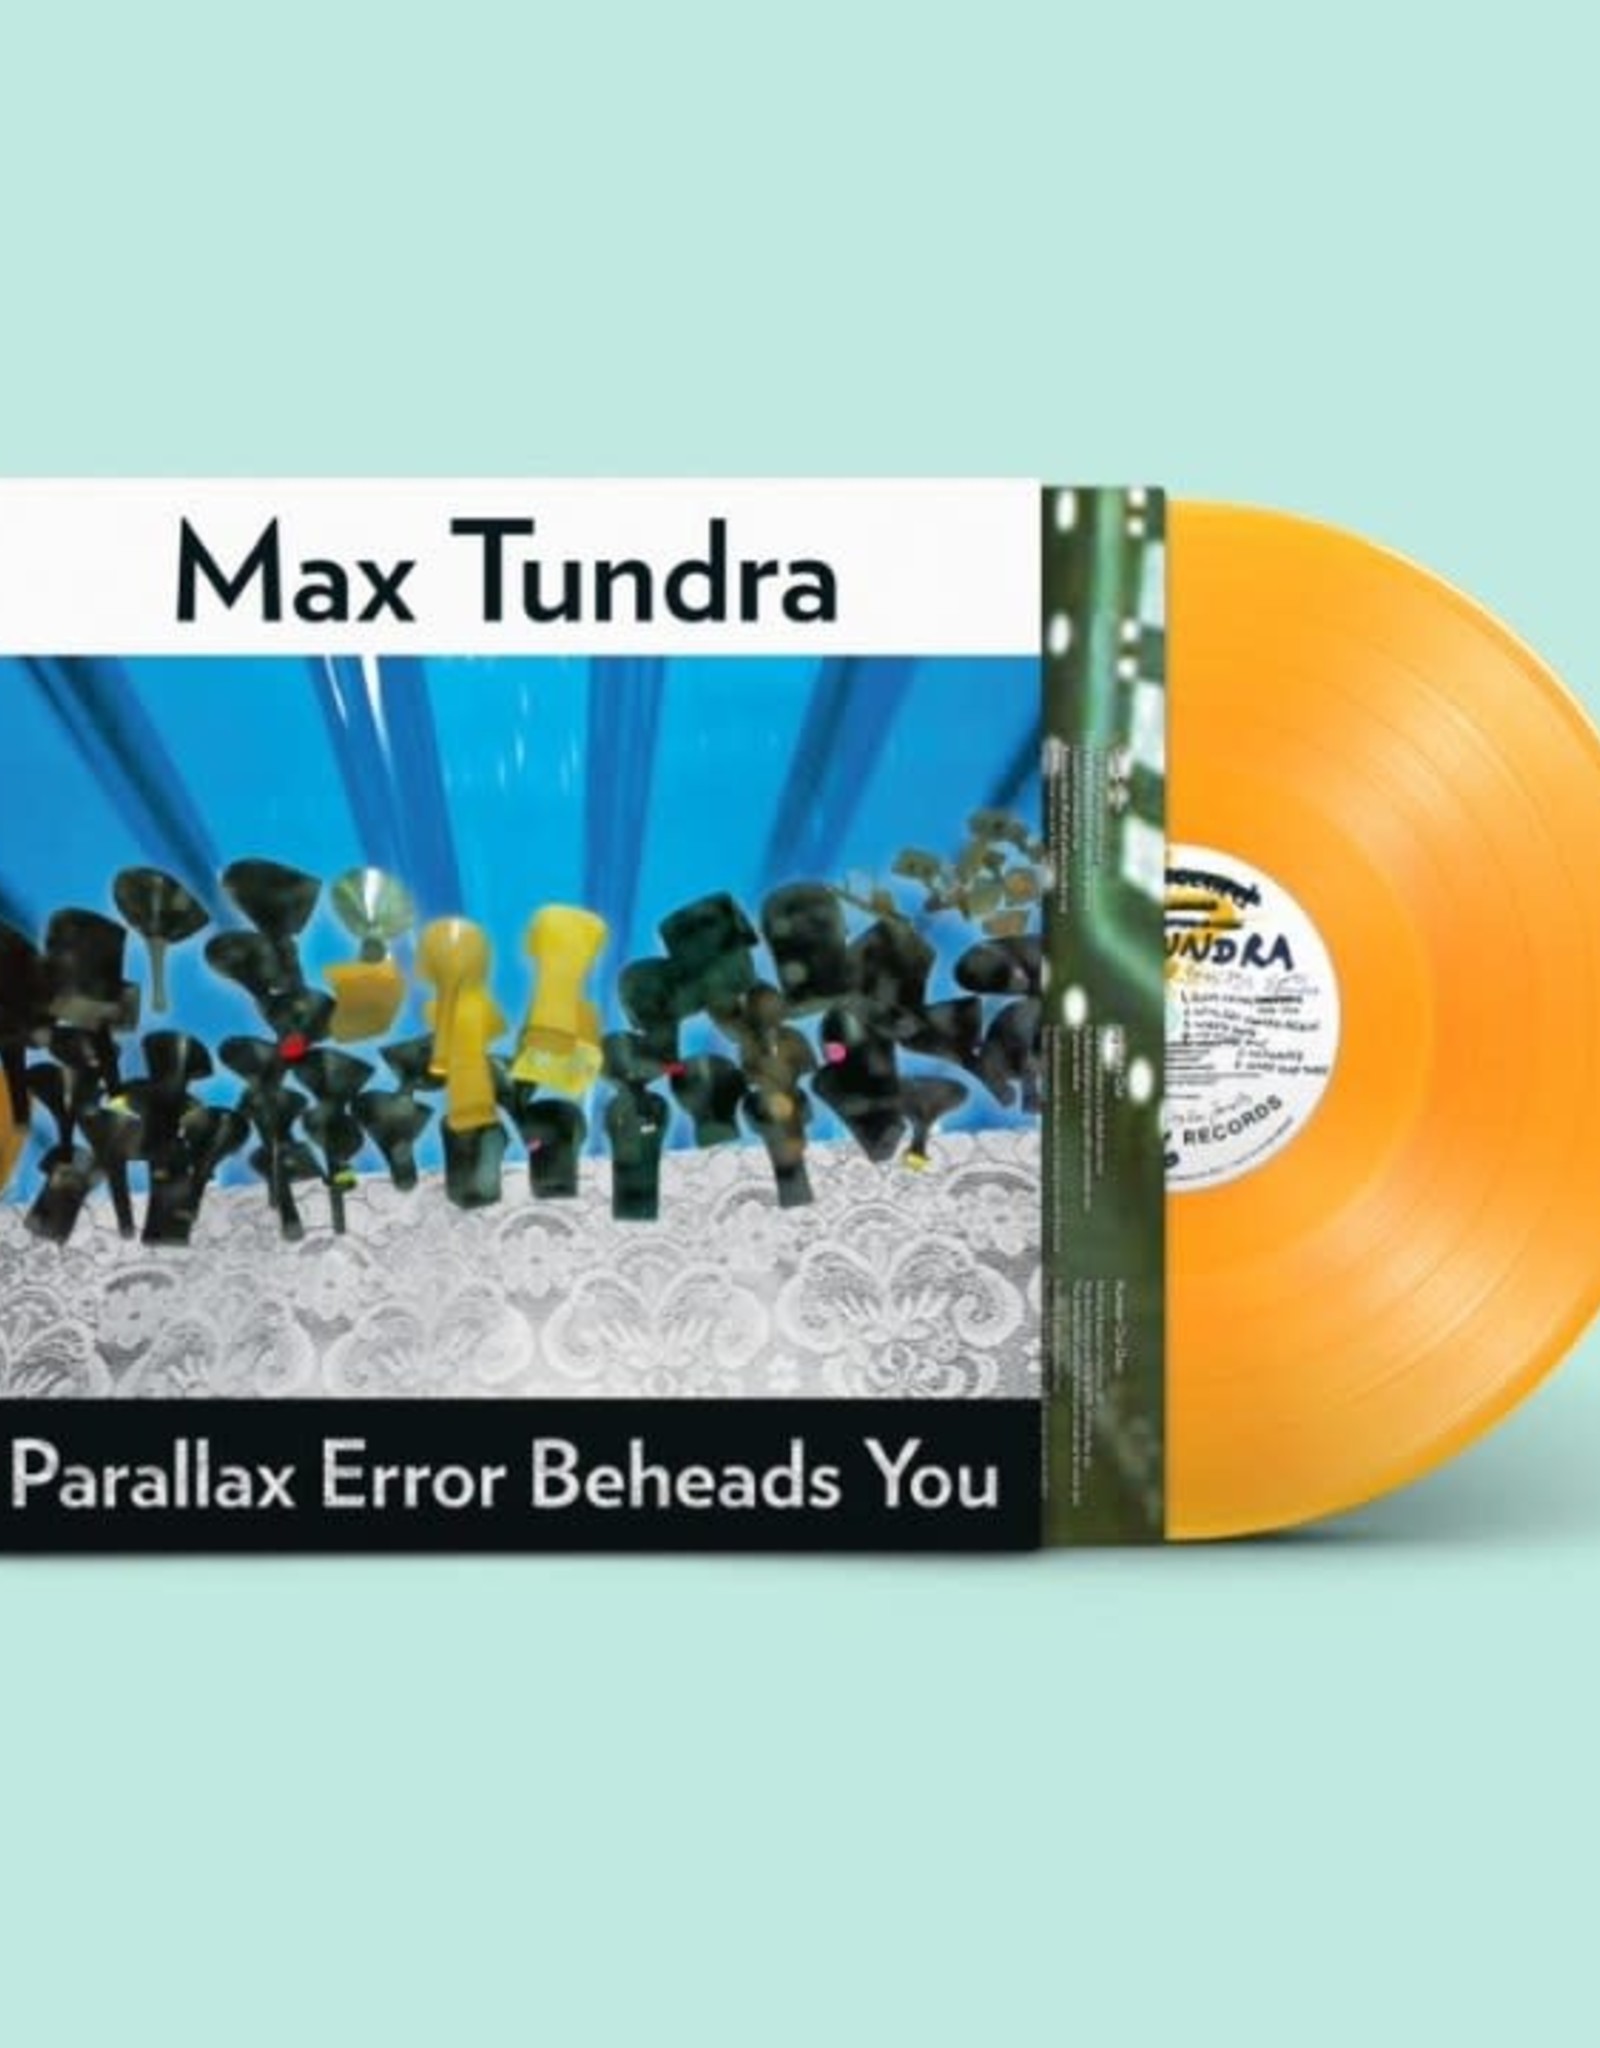 Max Tundra - Parallax Error Beheads You (Orange Vinyl)